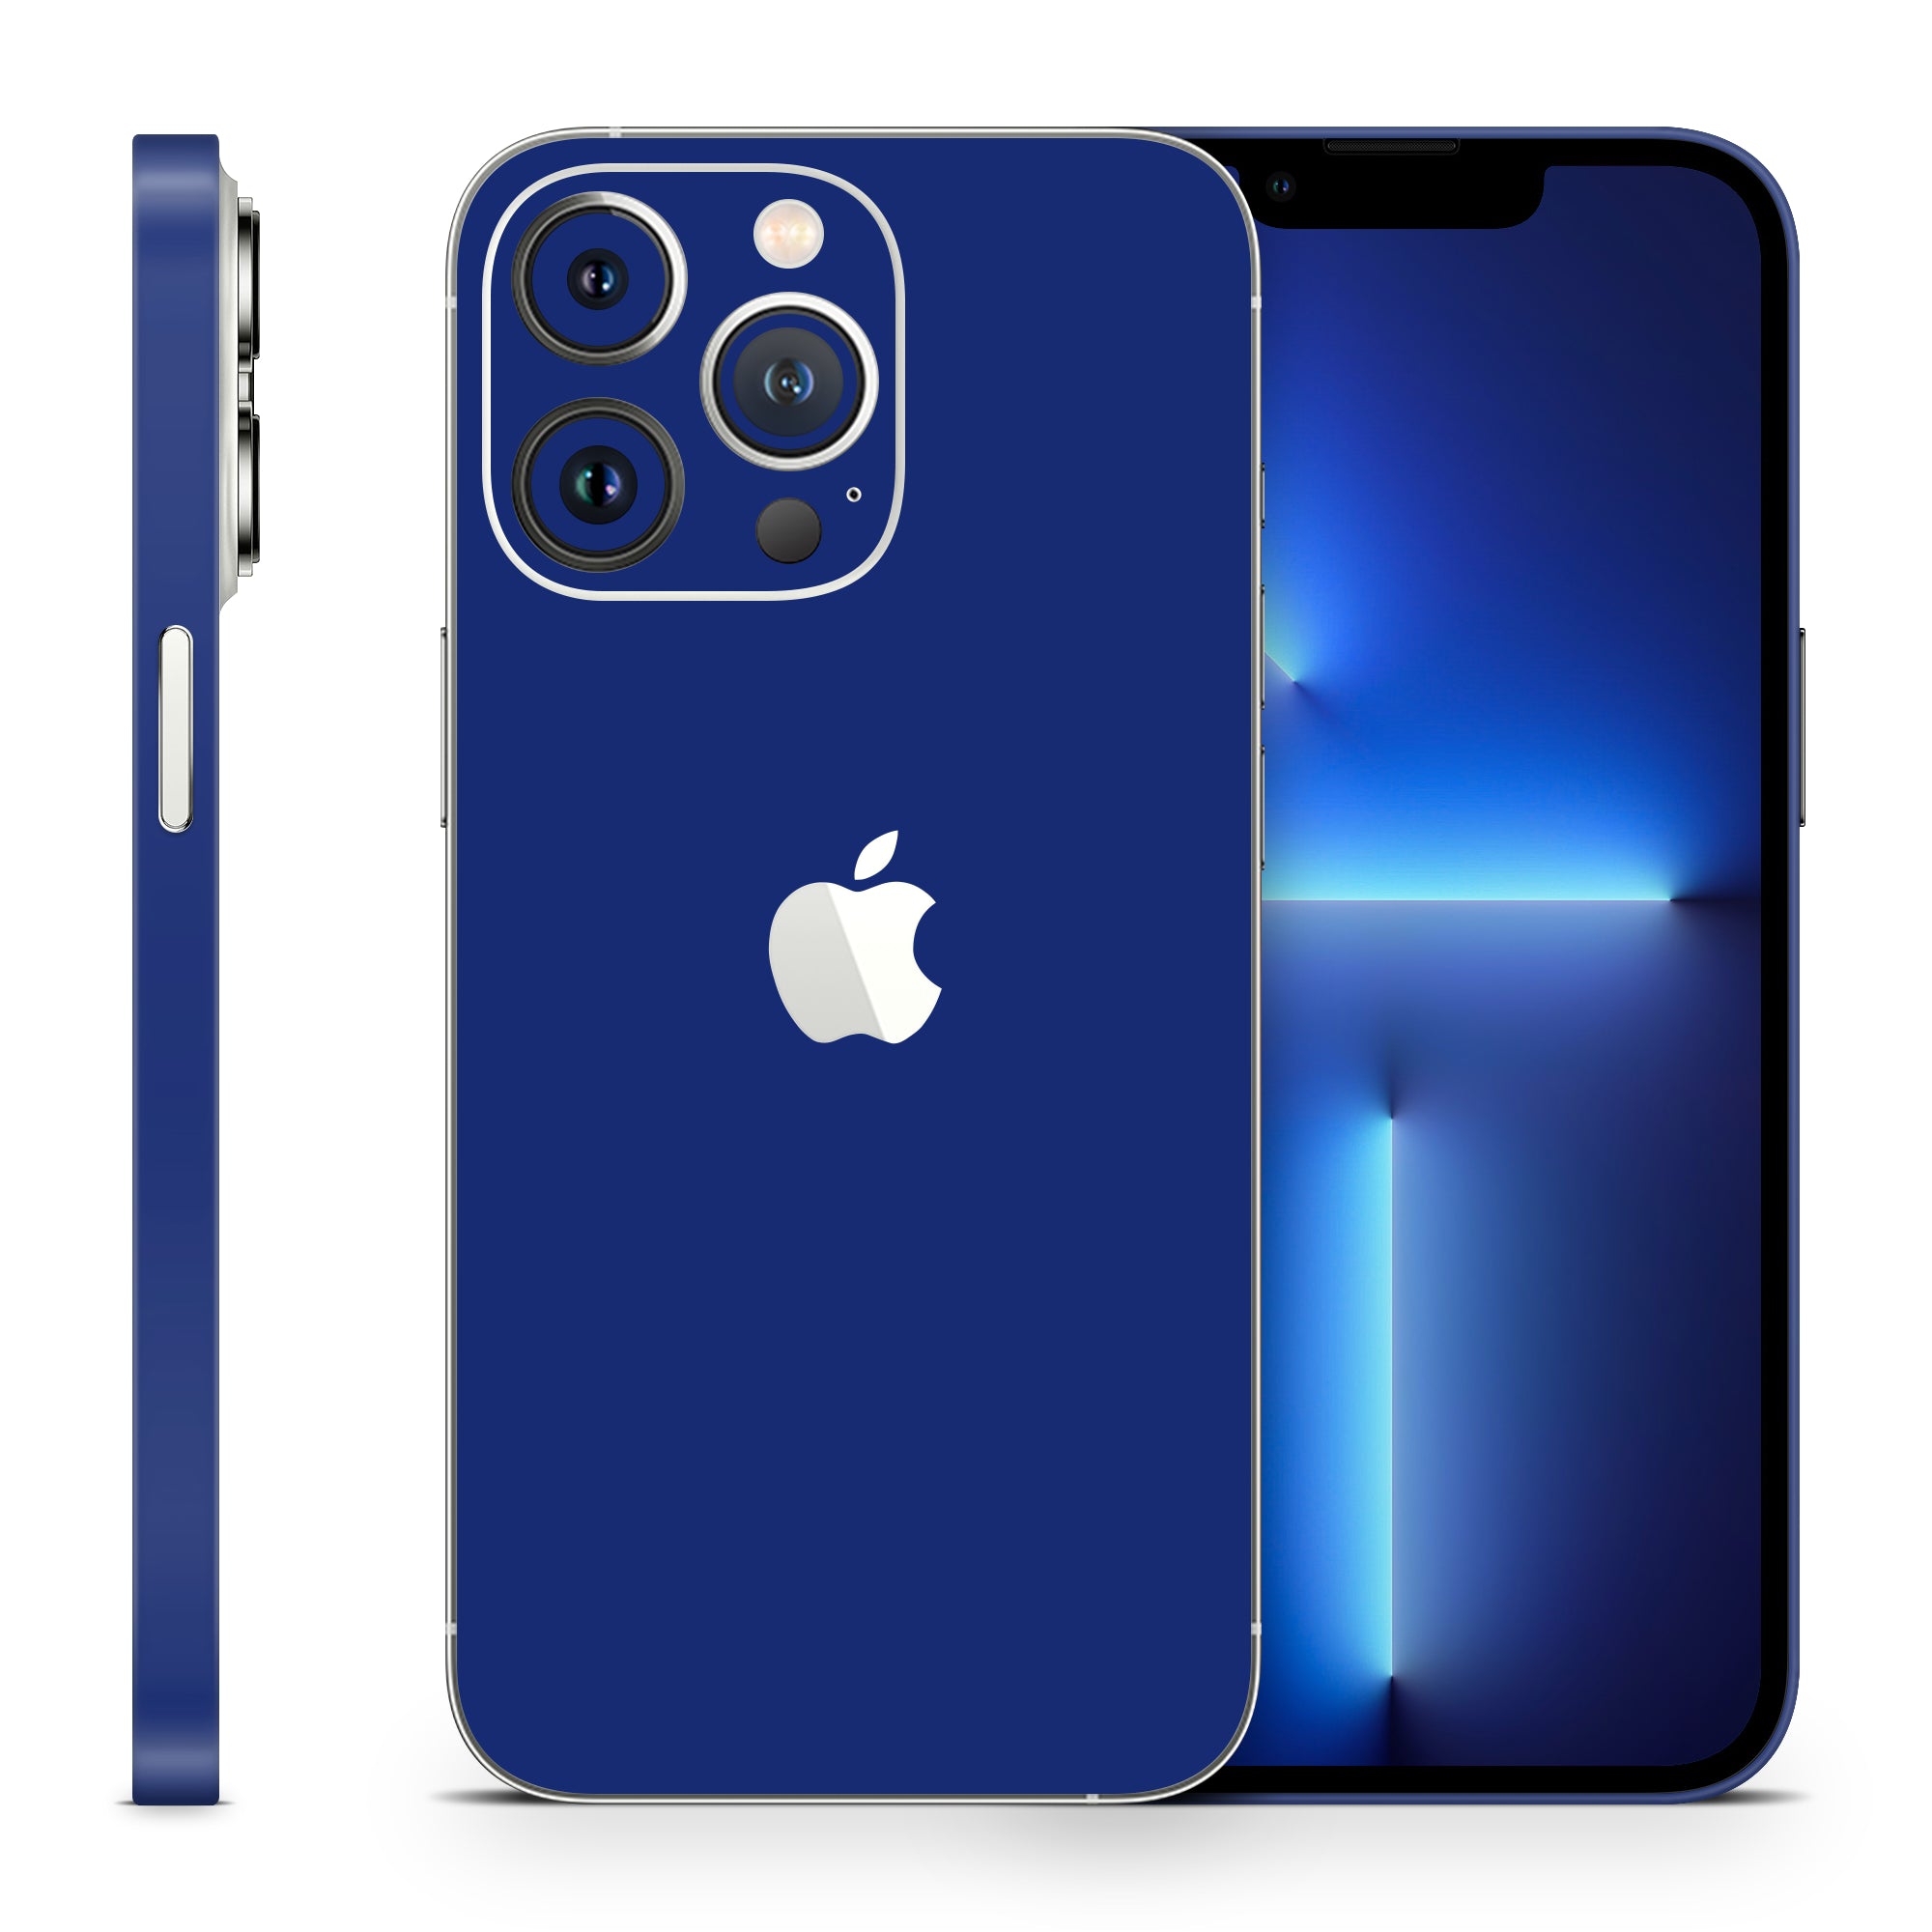 Iphone Skin - Skin IPhone - Night Blue